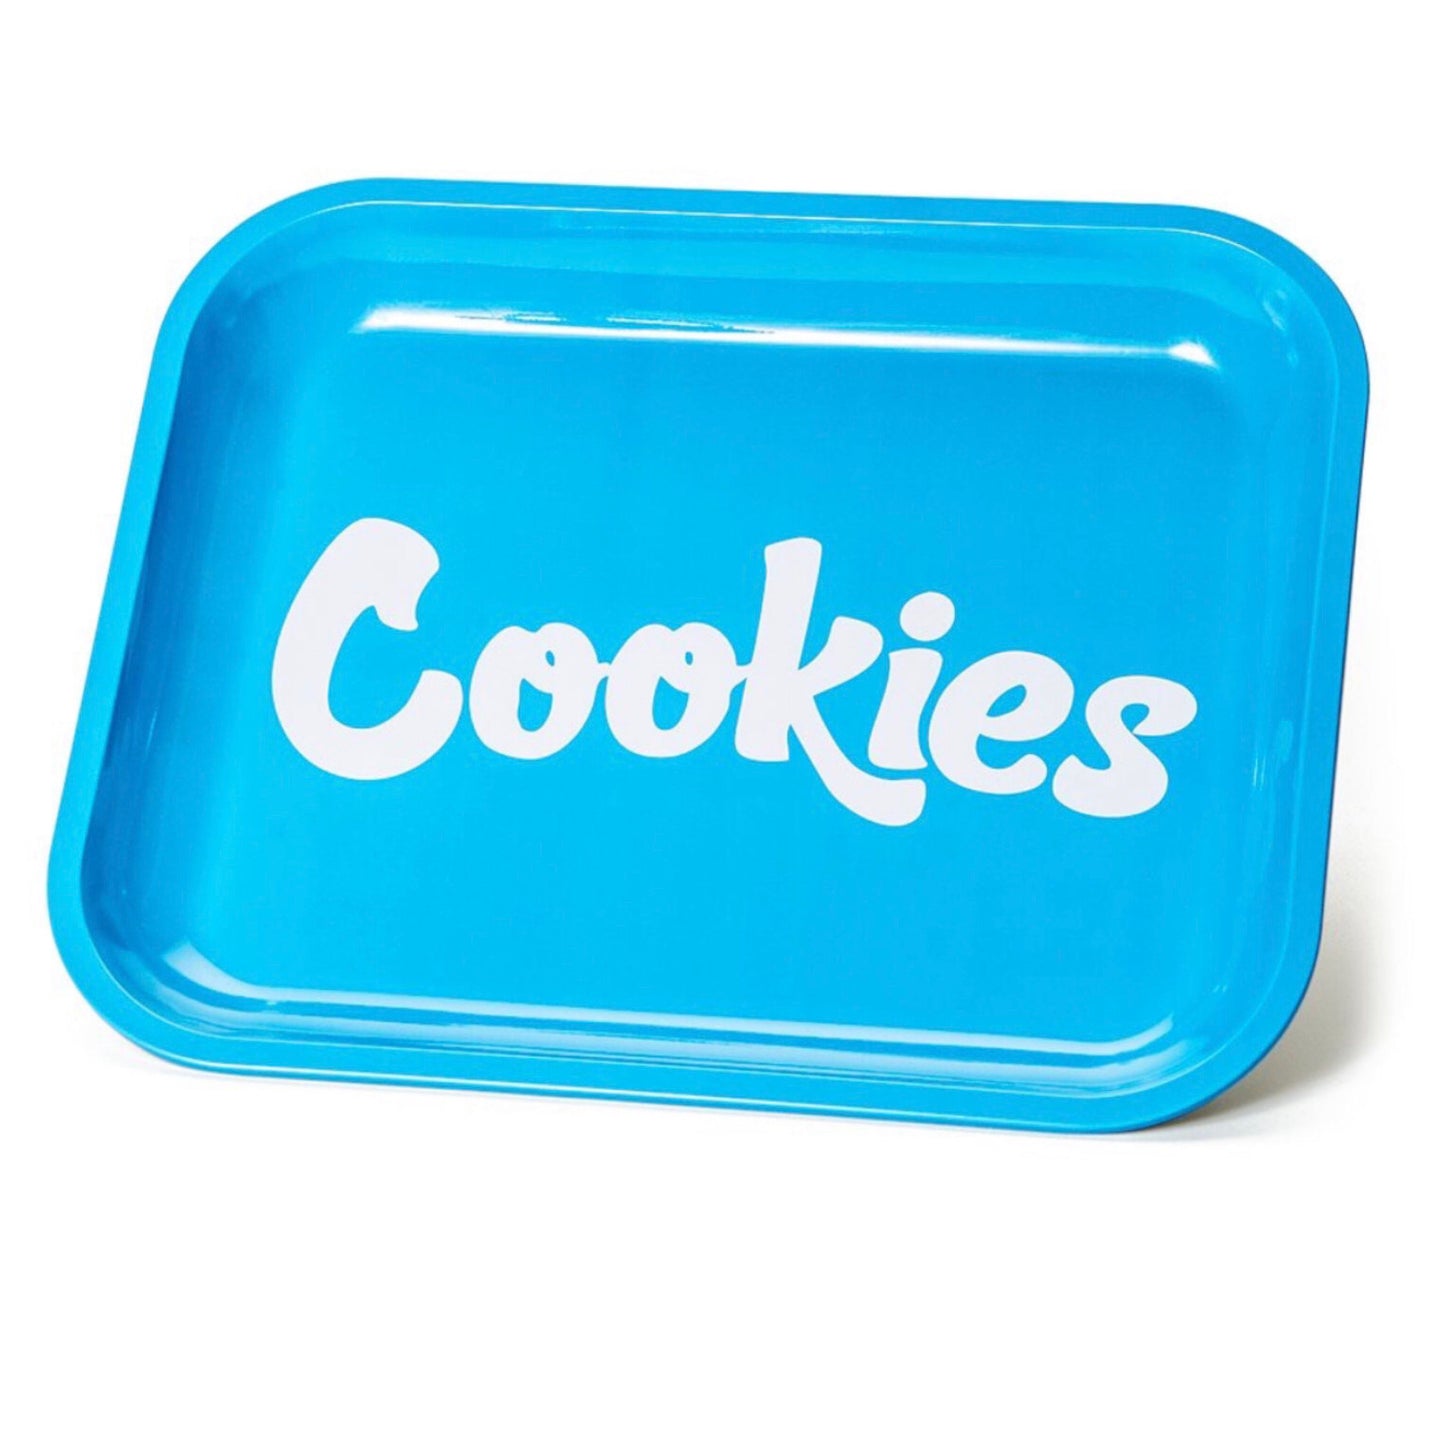 Cookies Plateau Bleu (Large)